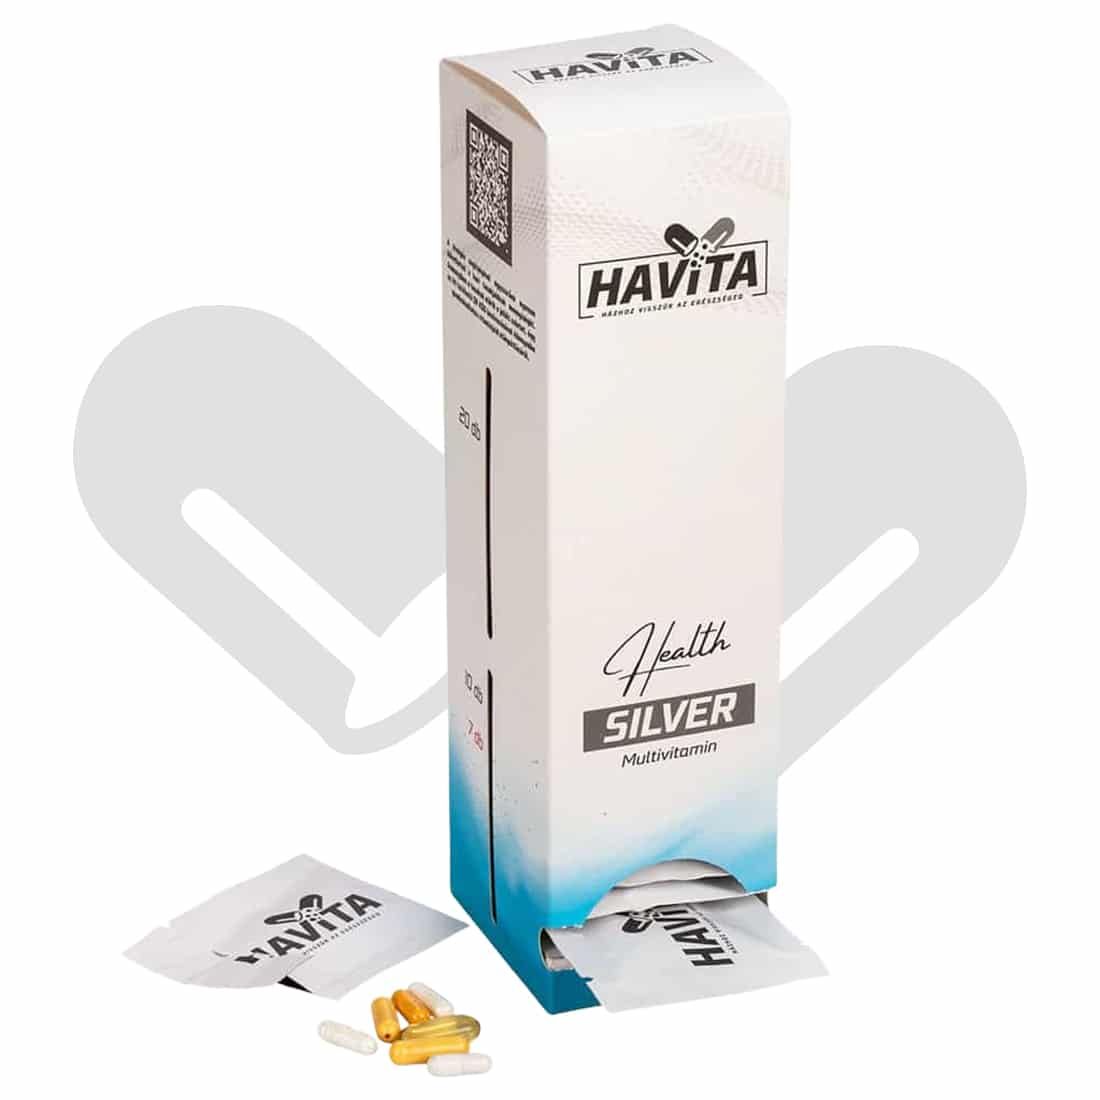 Havita Health Silver multivitamincsomag – havi multavitamincsomag immunerősítéshez, 31×7 vitamin